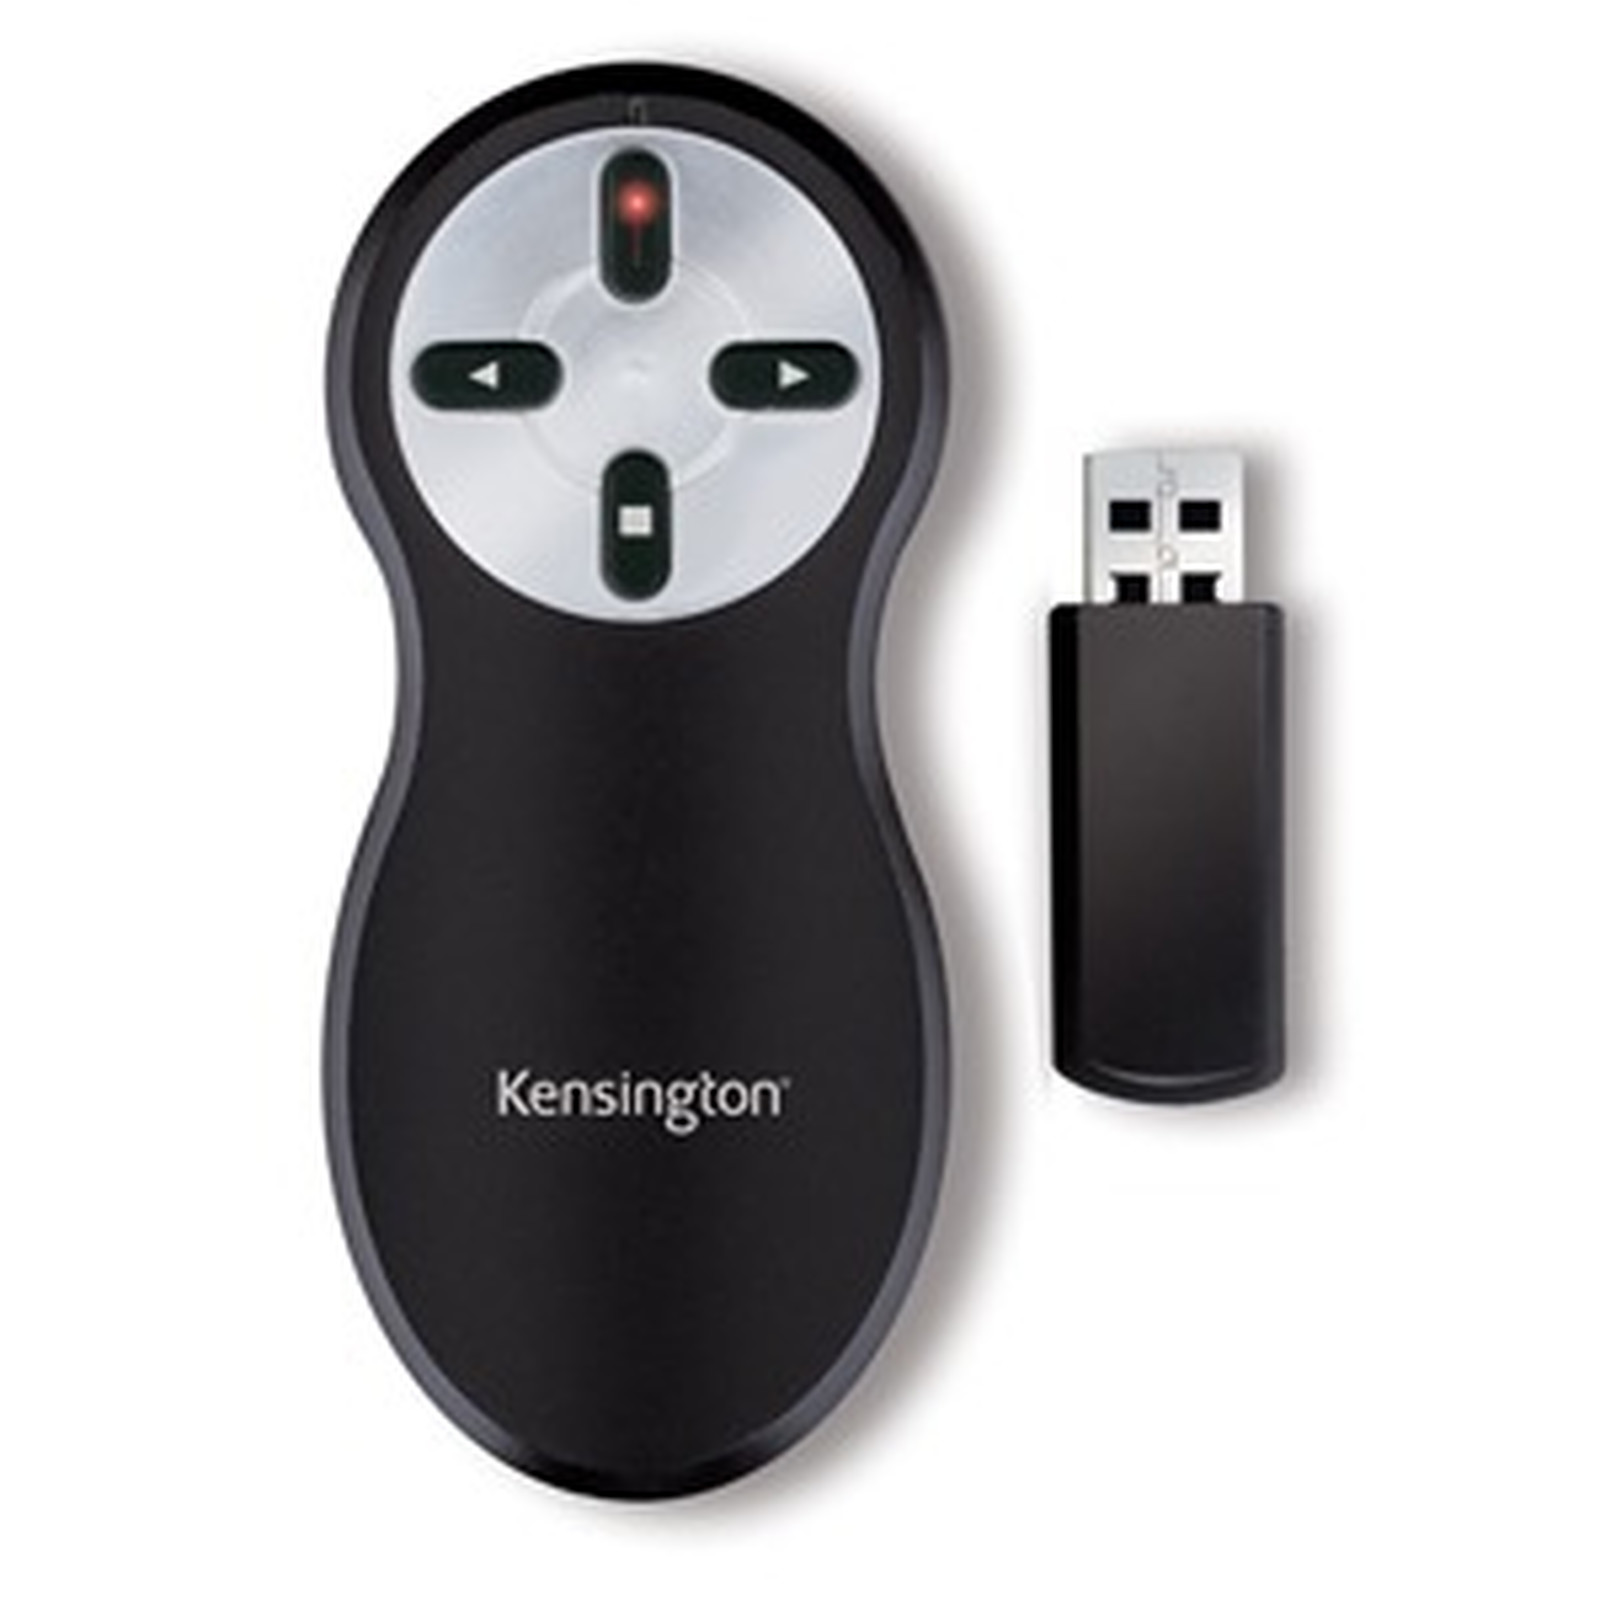 Kensington Si600 Wireless Presenter with Laser Pointer - Pointeur laser Kensington